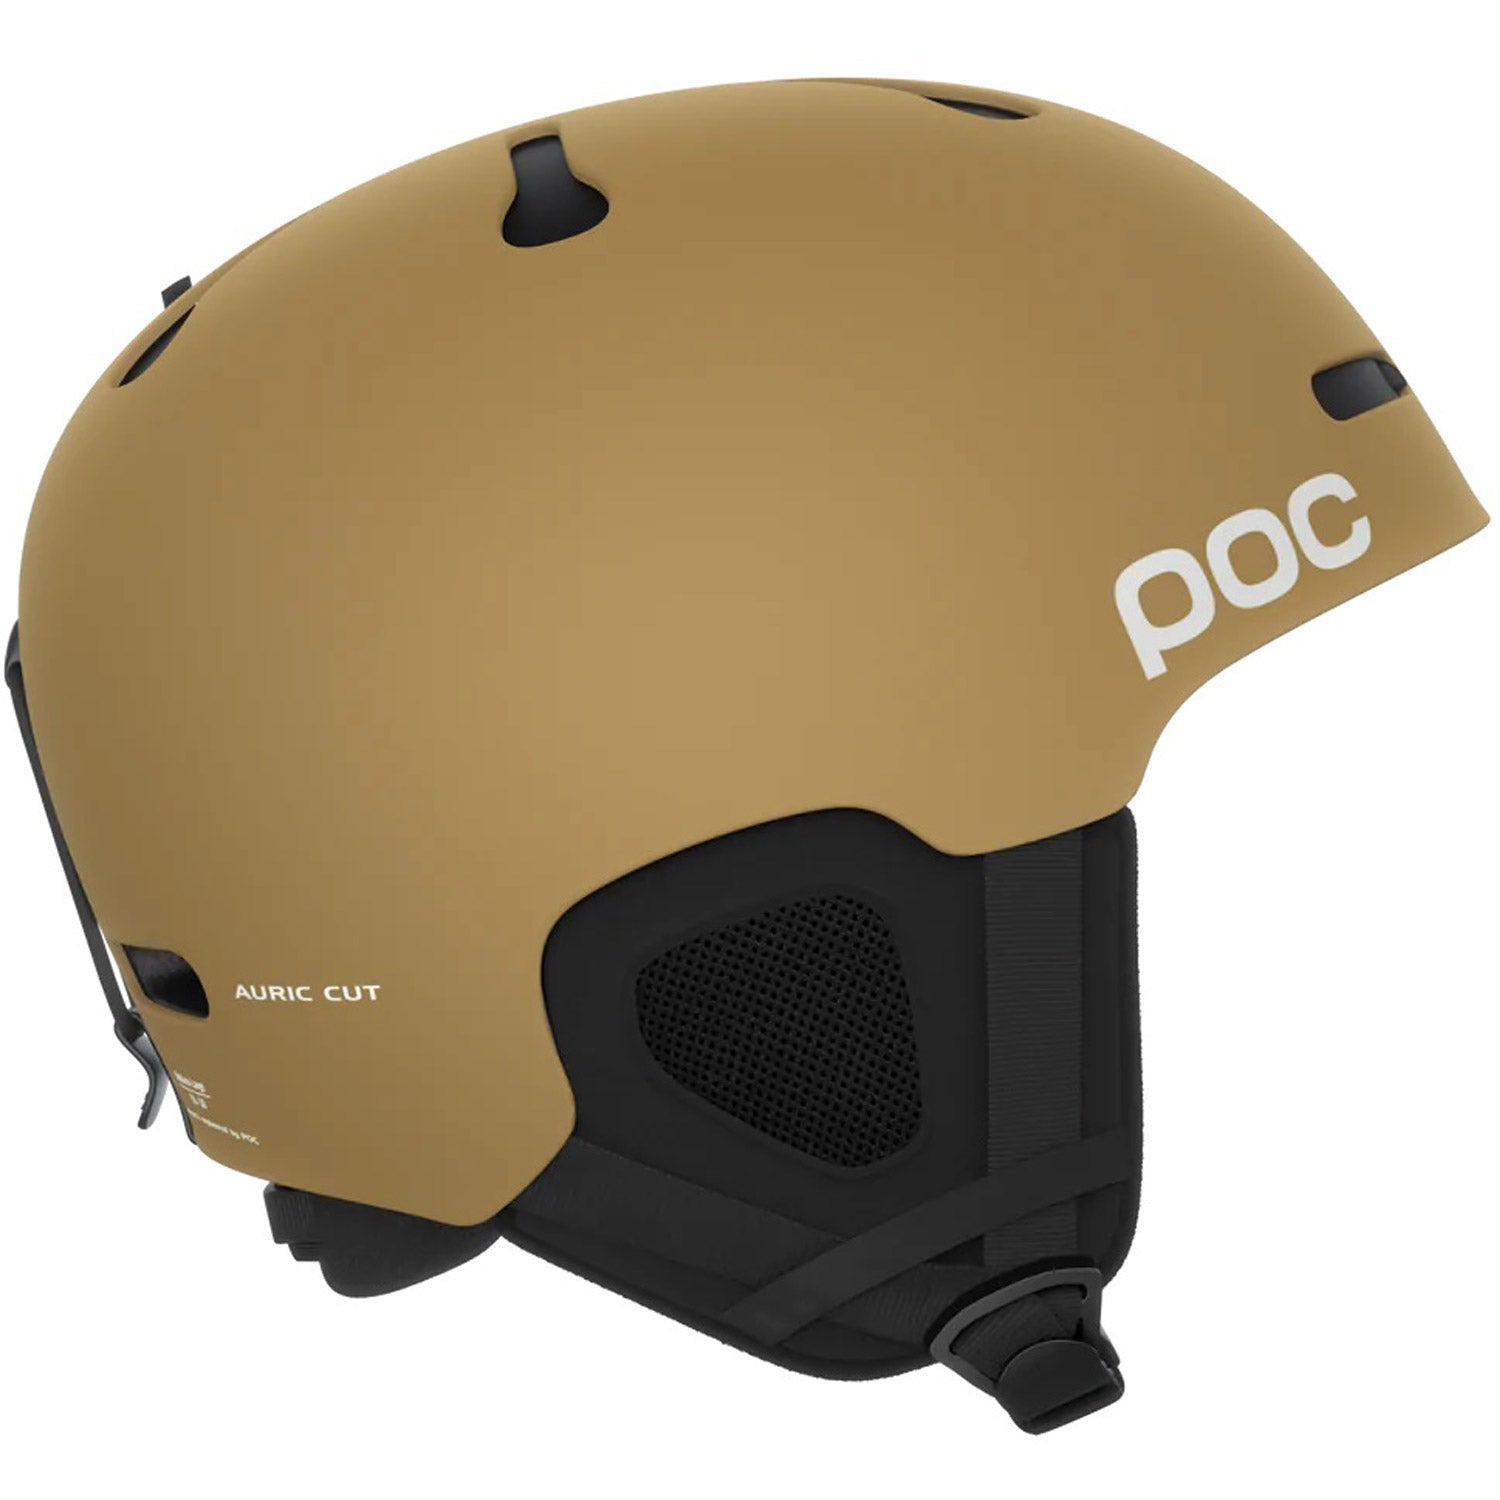 Auric Cut Helmet